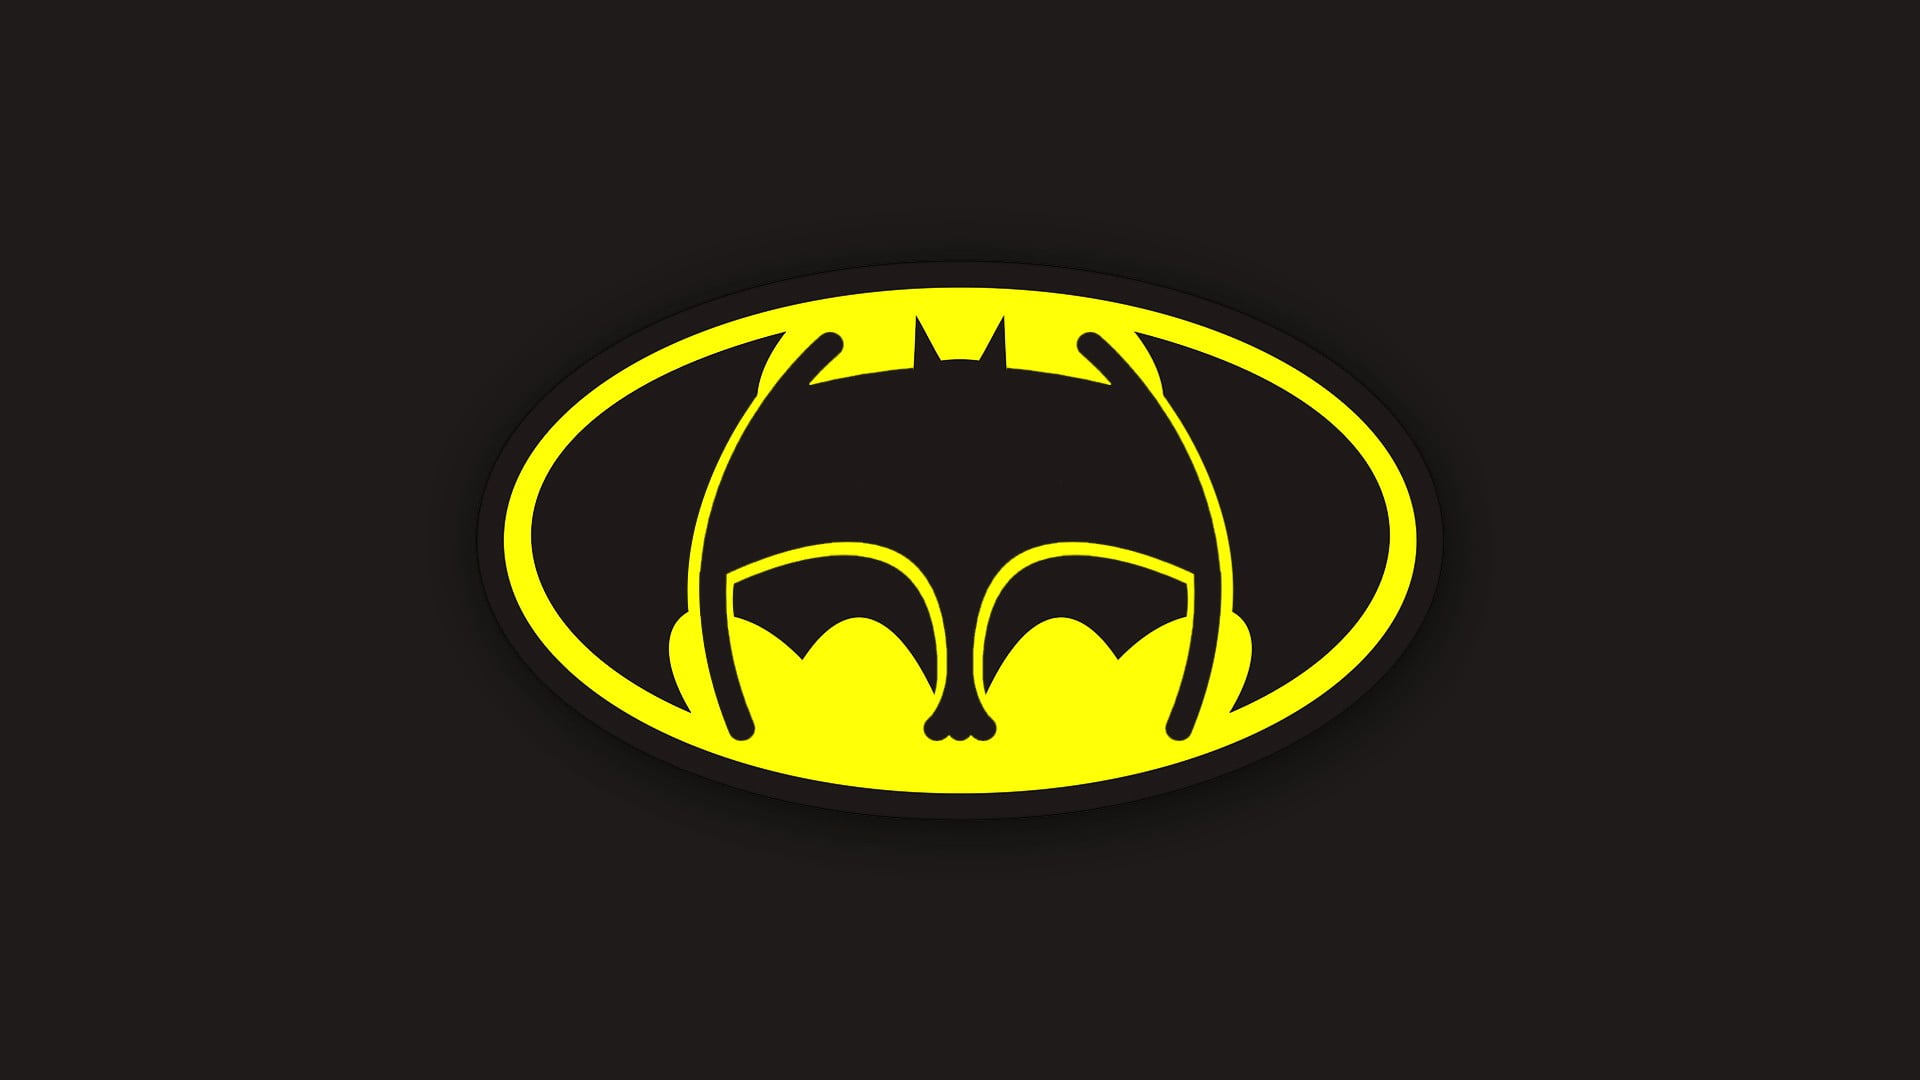 Batman logo digital wallpaper, simple background, logo, black, yellow